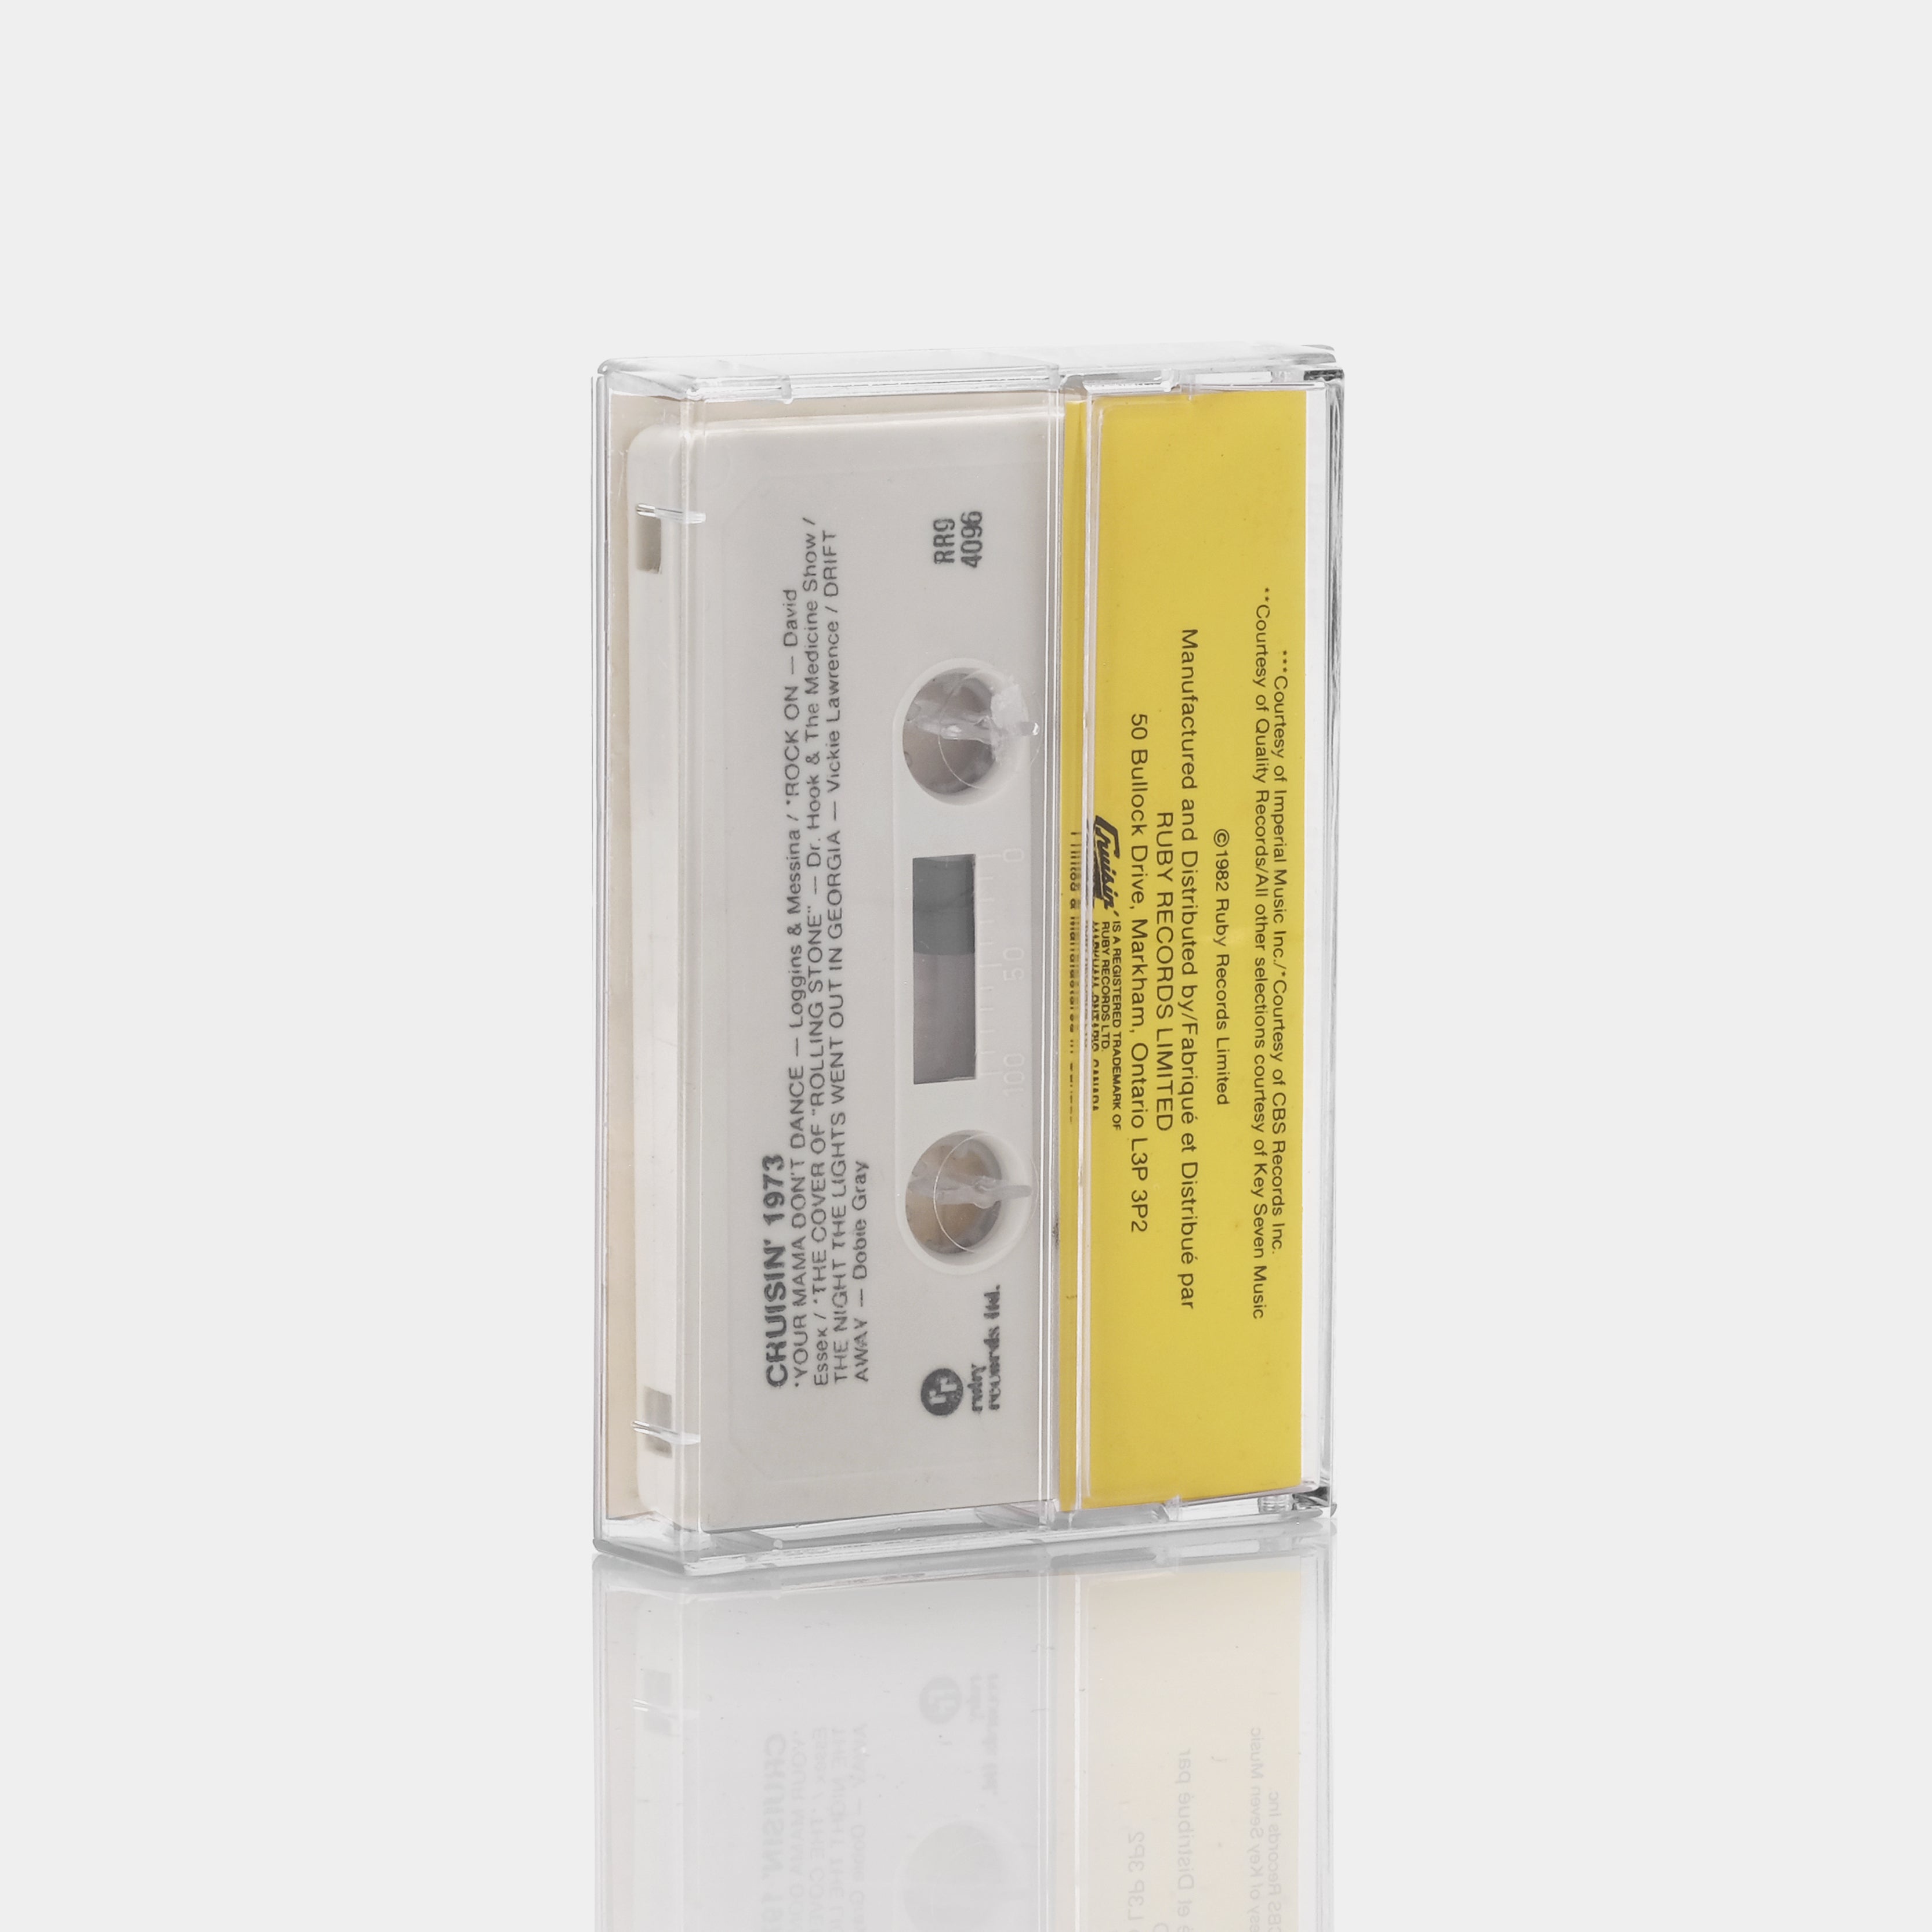 Cruisin' 1973 Cassette Tape